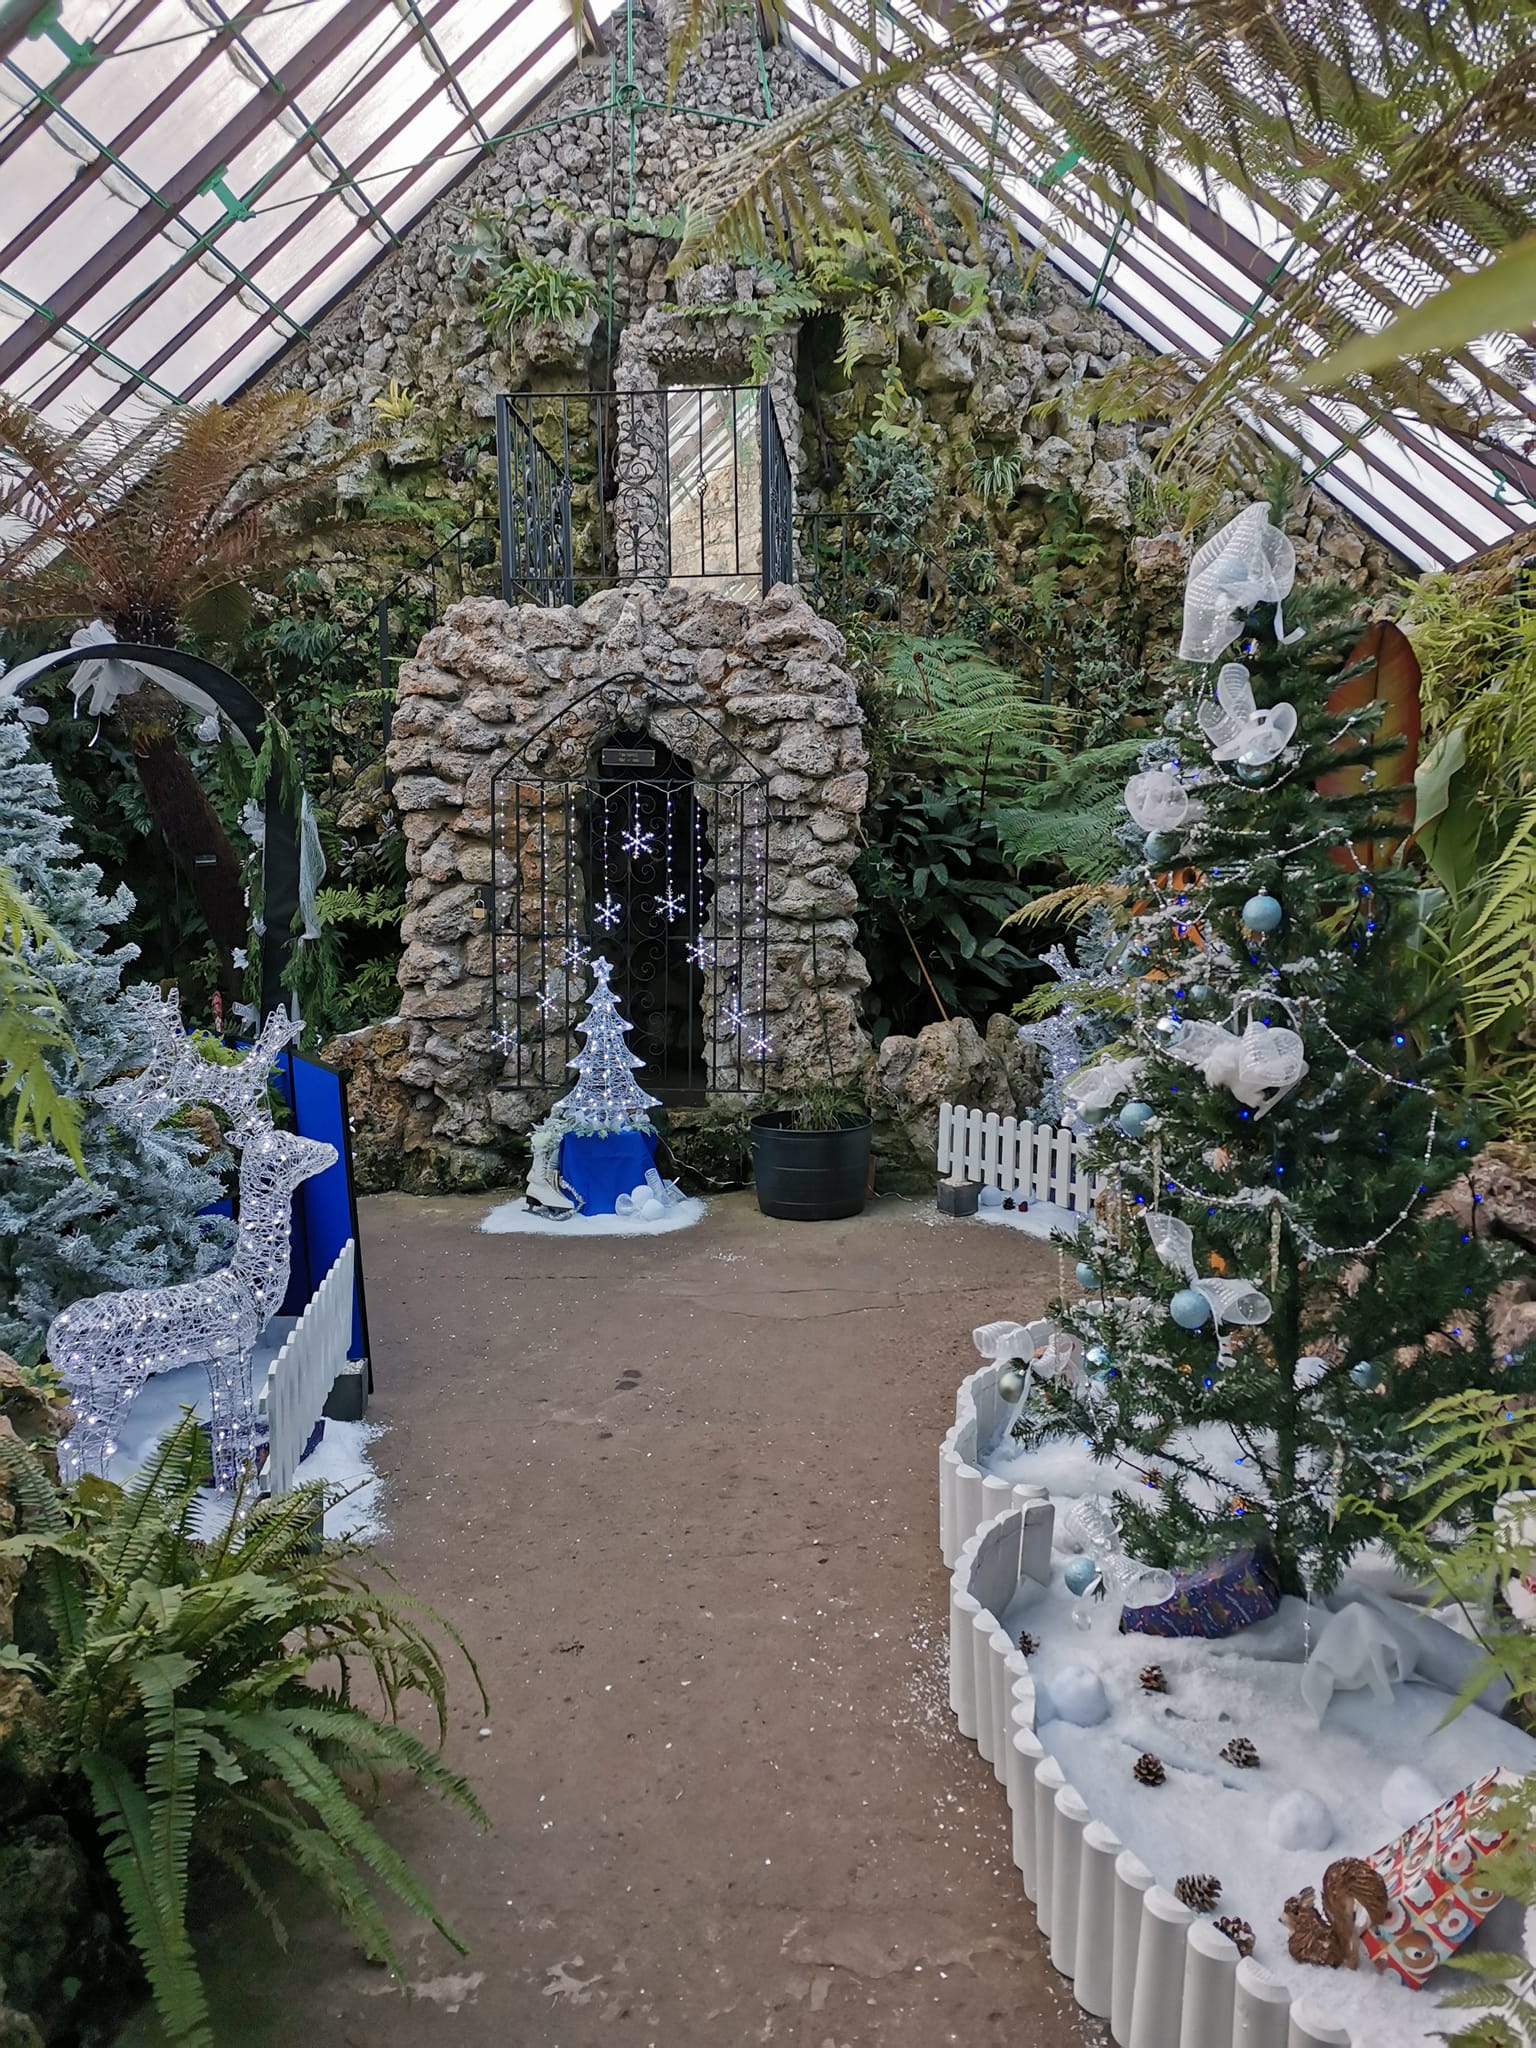 The Fernery looking festive ready for the Botanic Christmas Fair